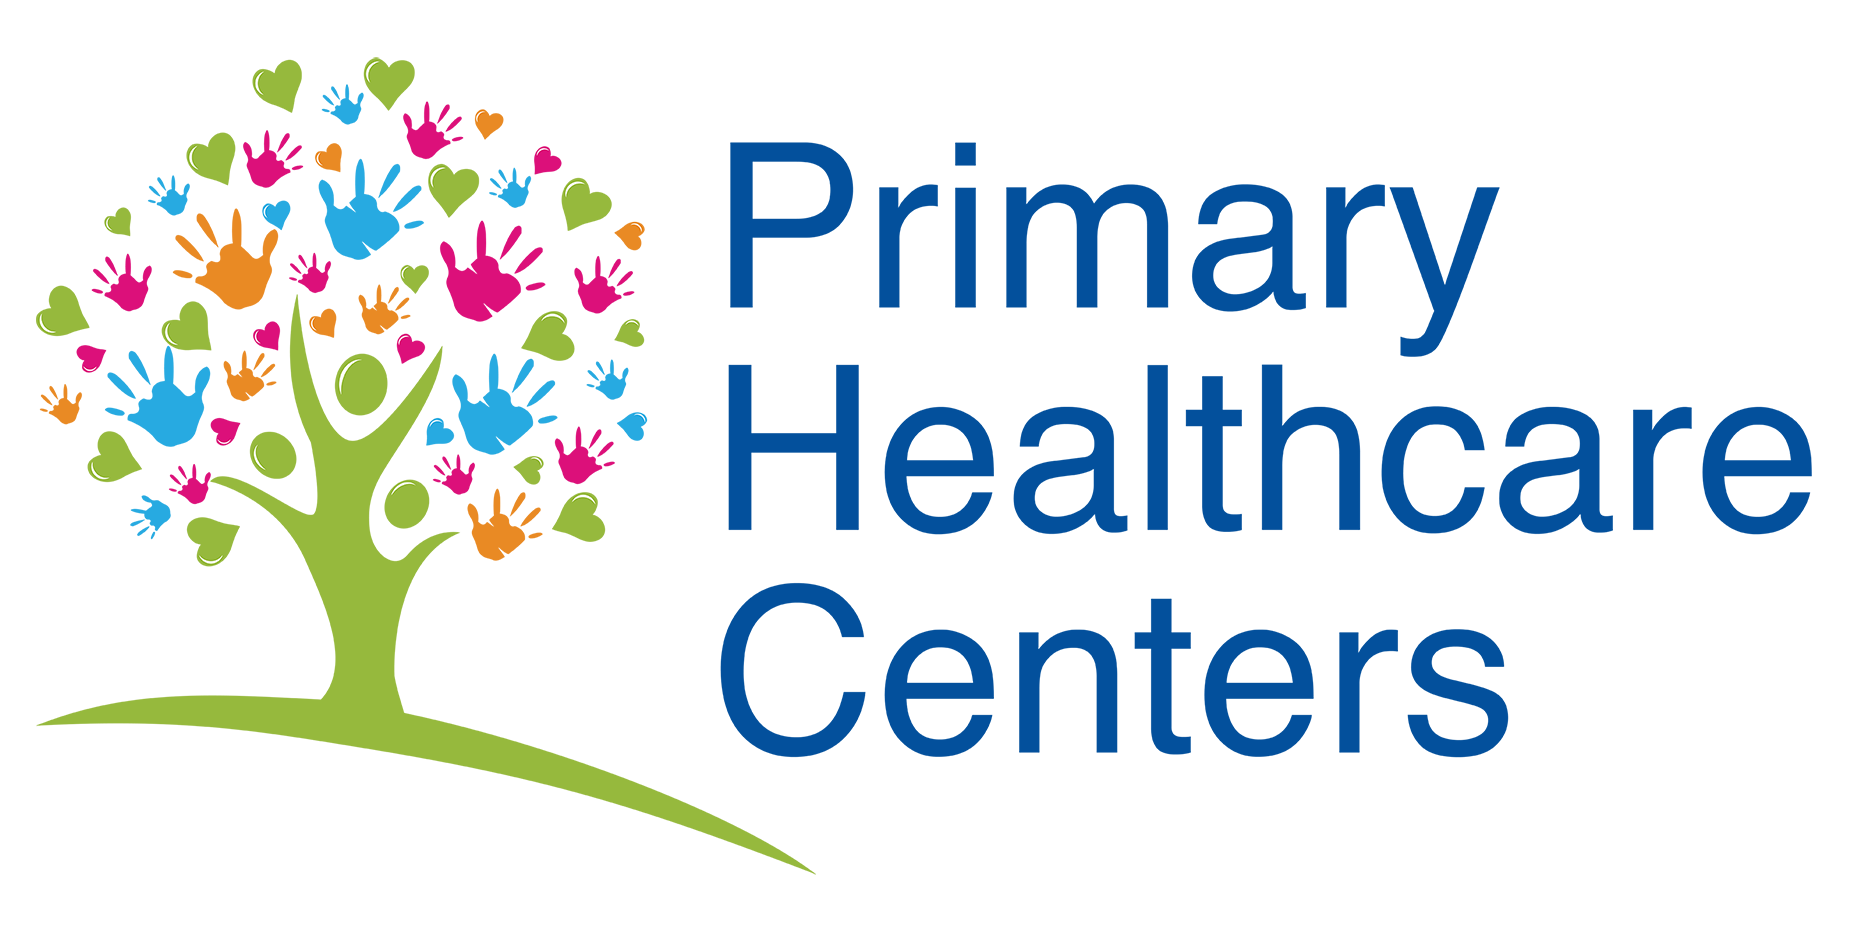 Primary Healthcare Centers